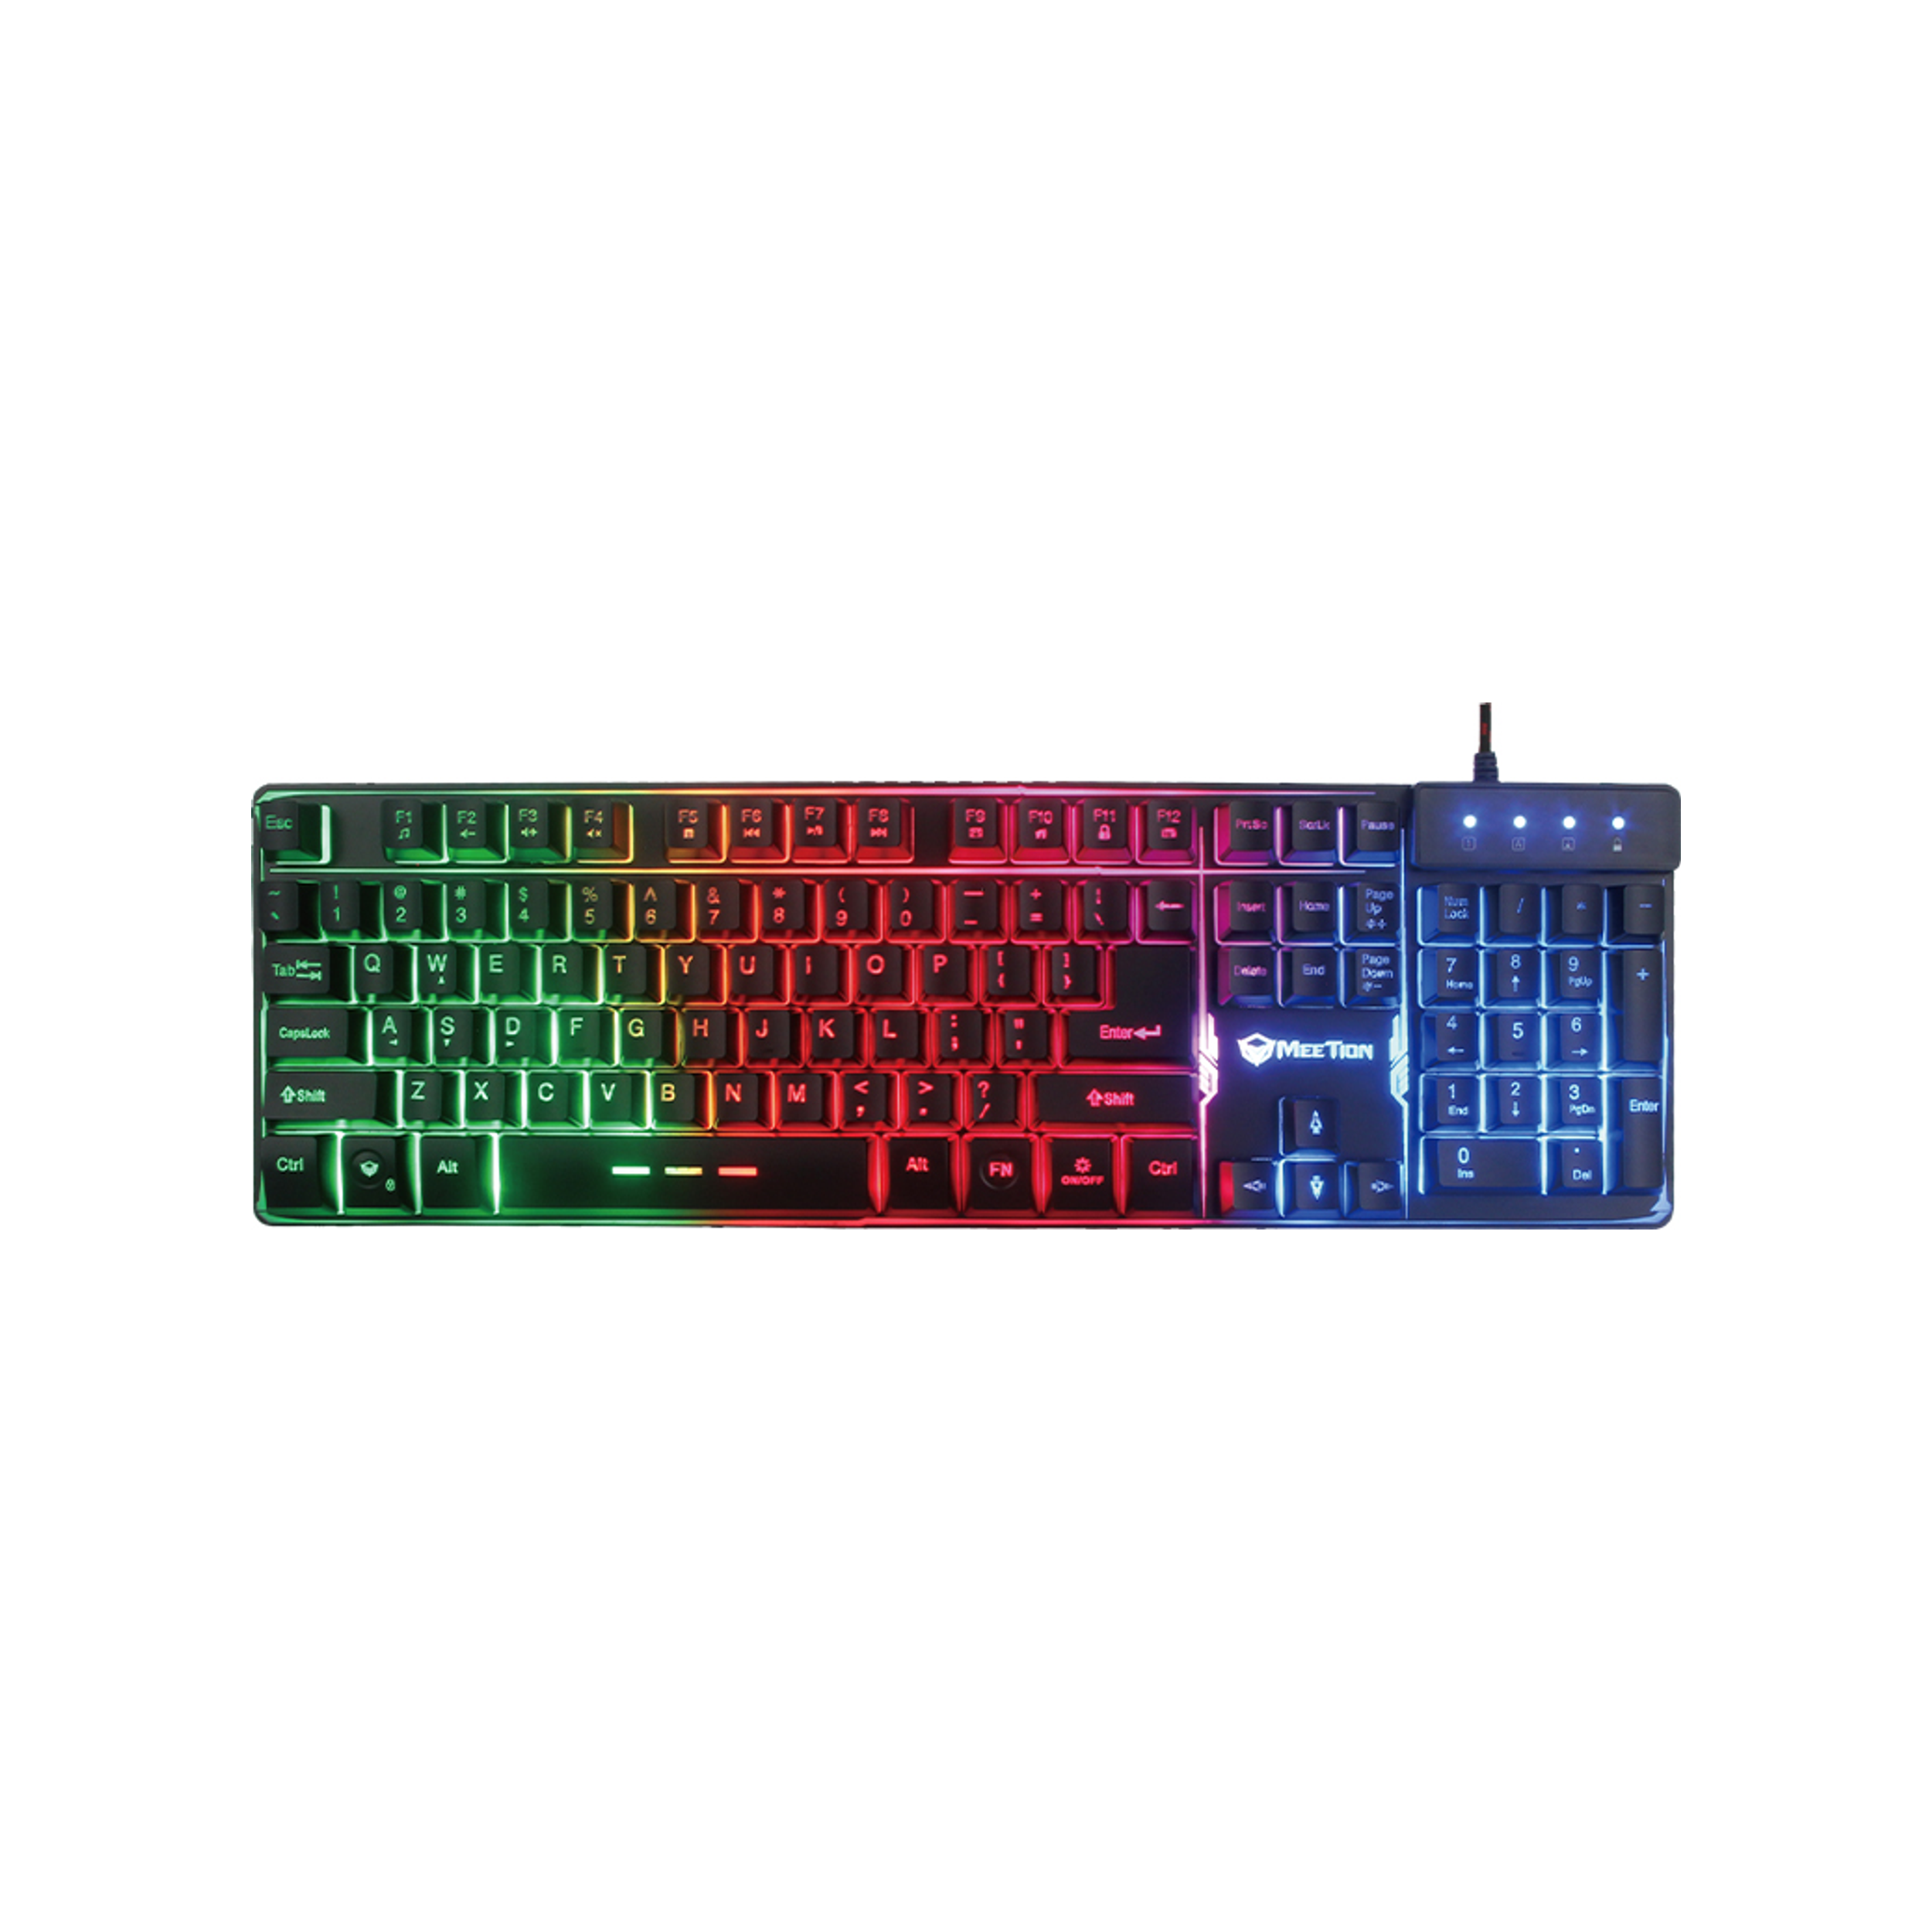 Meetion Colourful Rainbow Backlit Gaming Keyboard